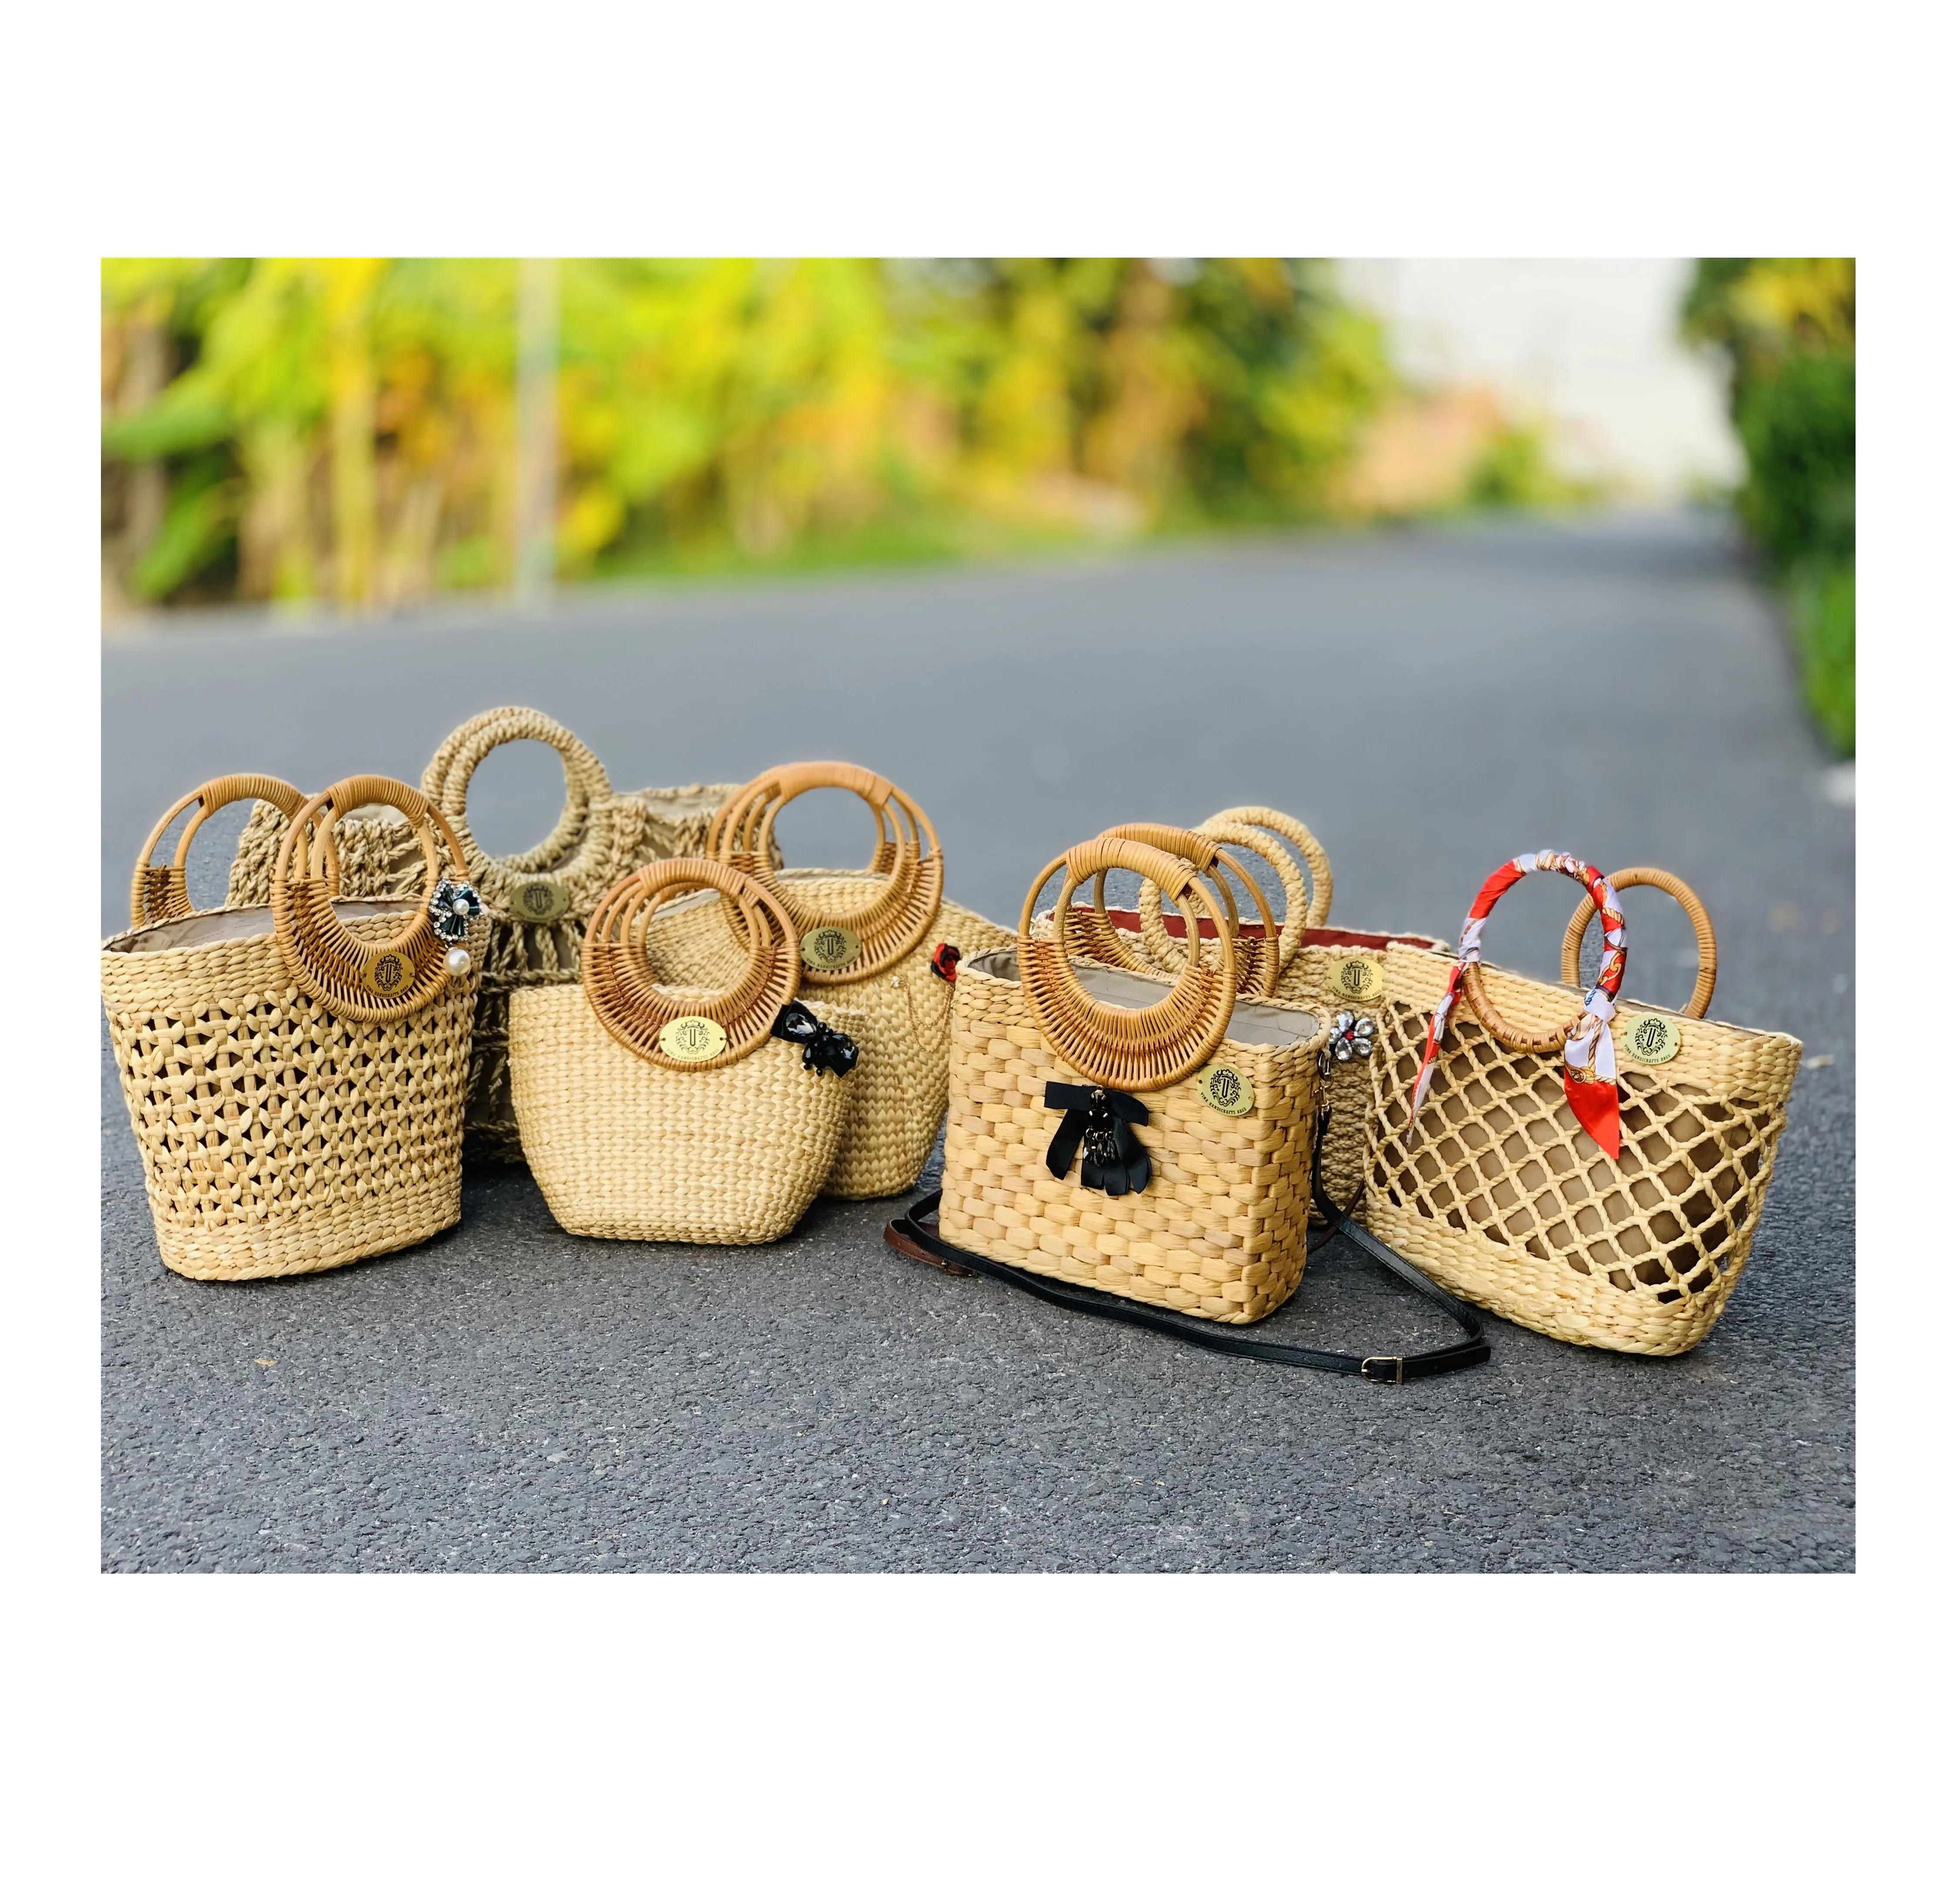 Handwoven Water hyacinth handbag seagrass women bag with liner inside straw beach bag summer tote bag